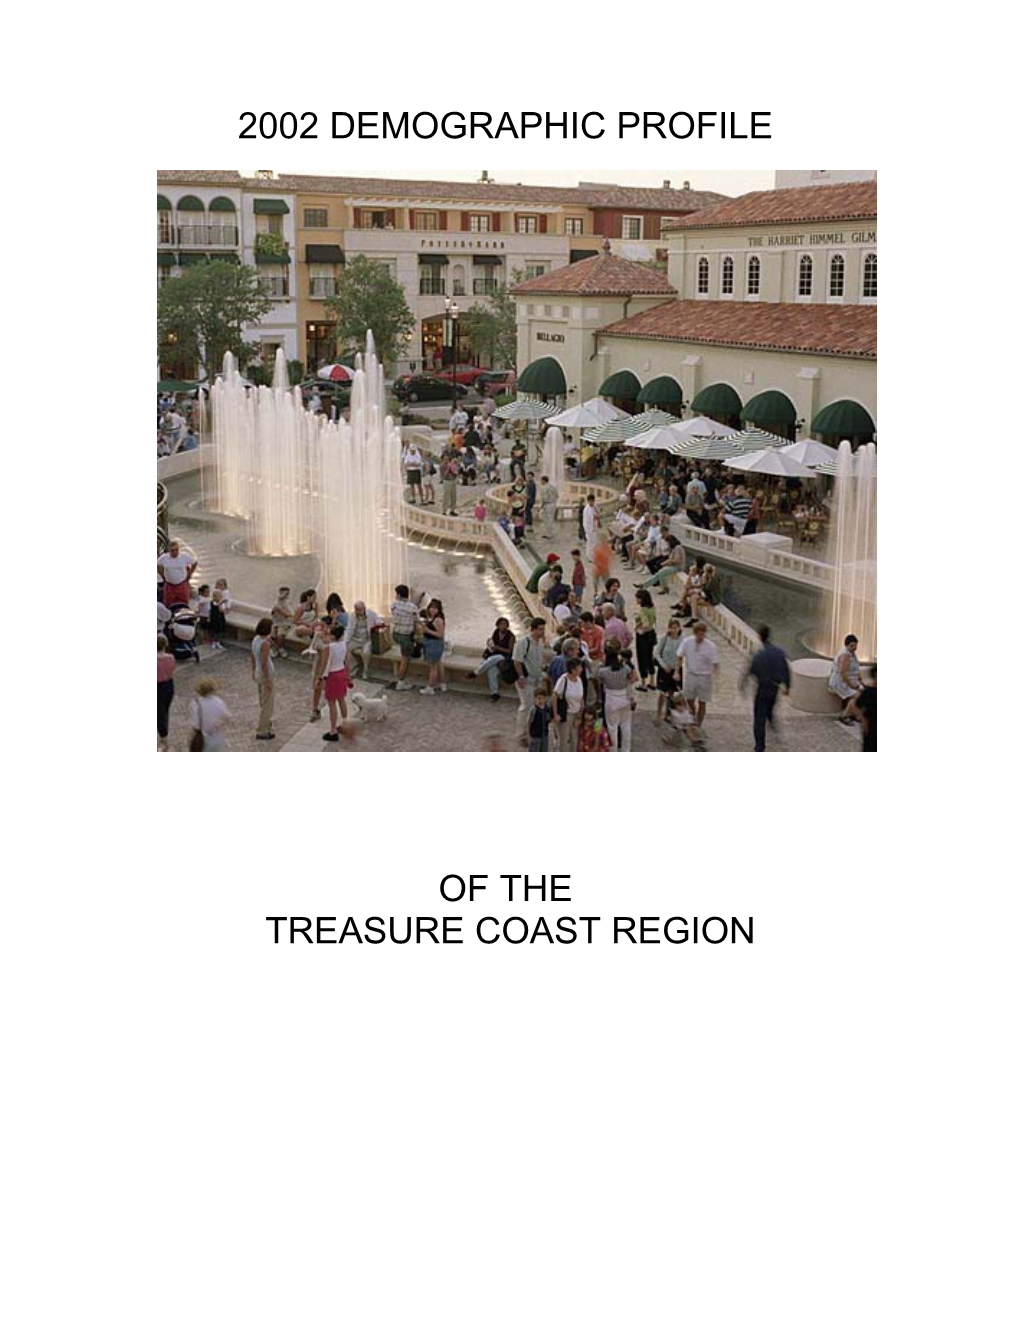 Demographic Profile of the Treasure Coast Region 2002